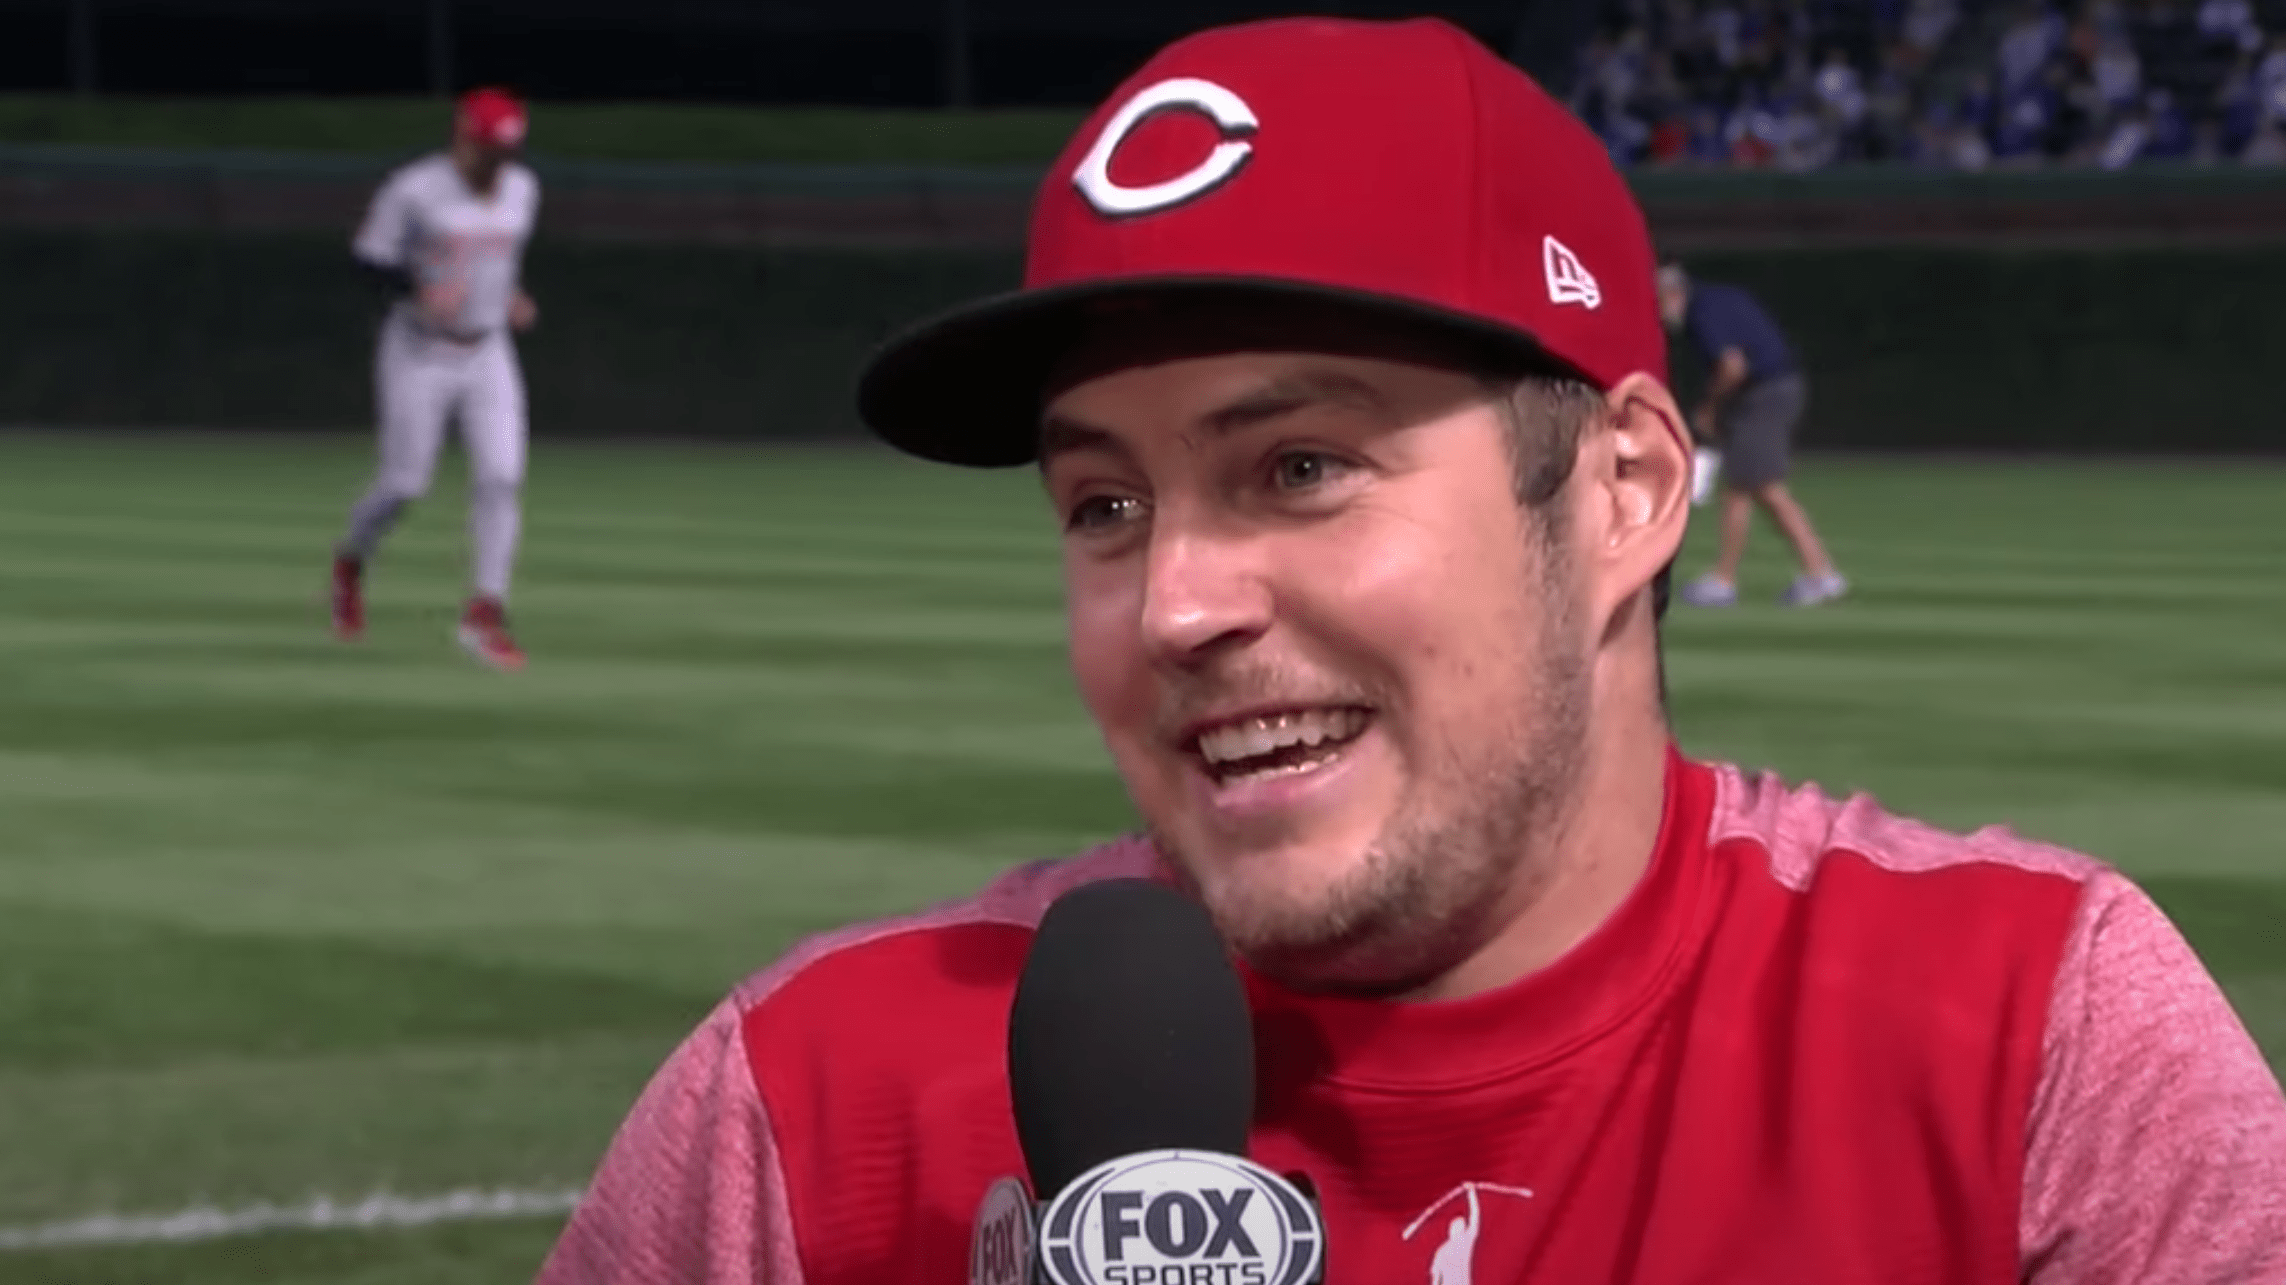 Reds pitcher Trevor Bauer smiles during a pregame interview.